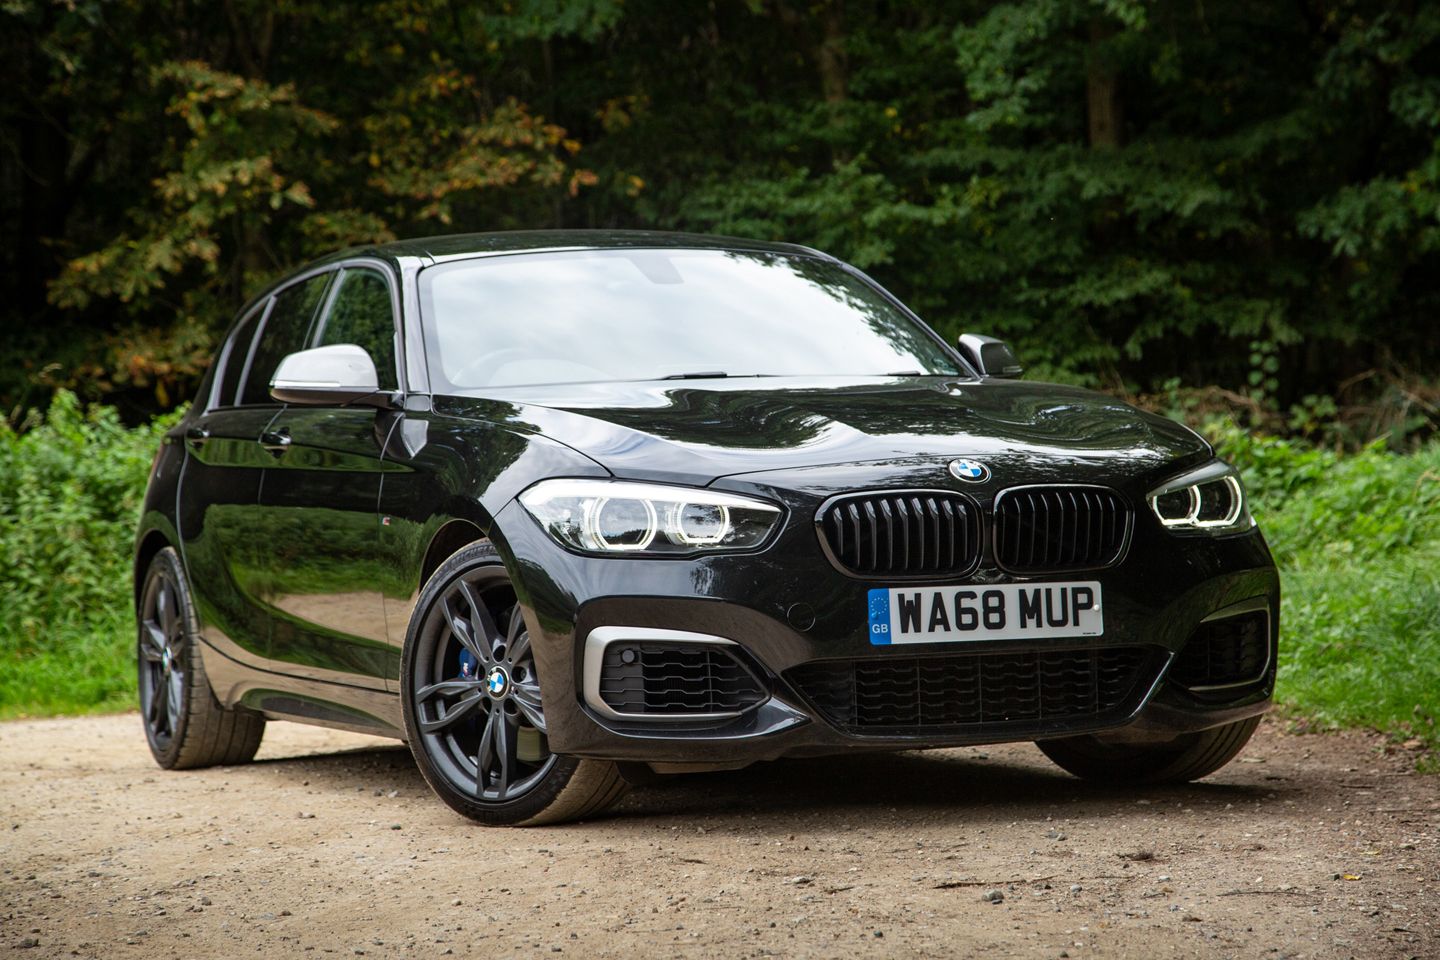 BMW F20 / F21 1 Series LCI Full Performance Package – KITS UK